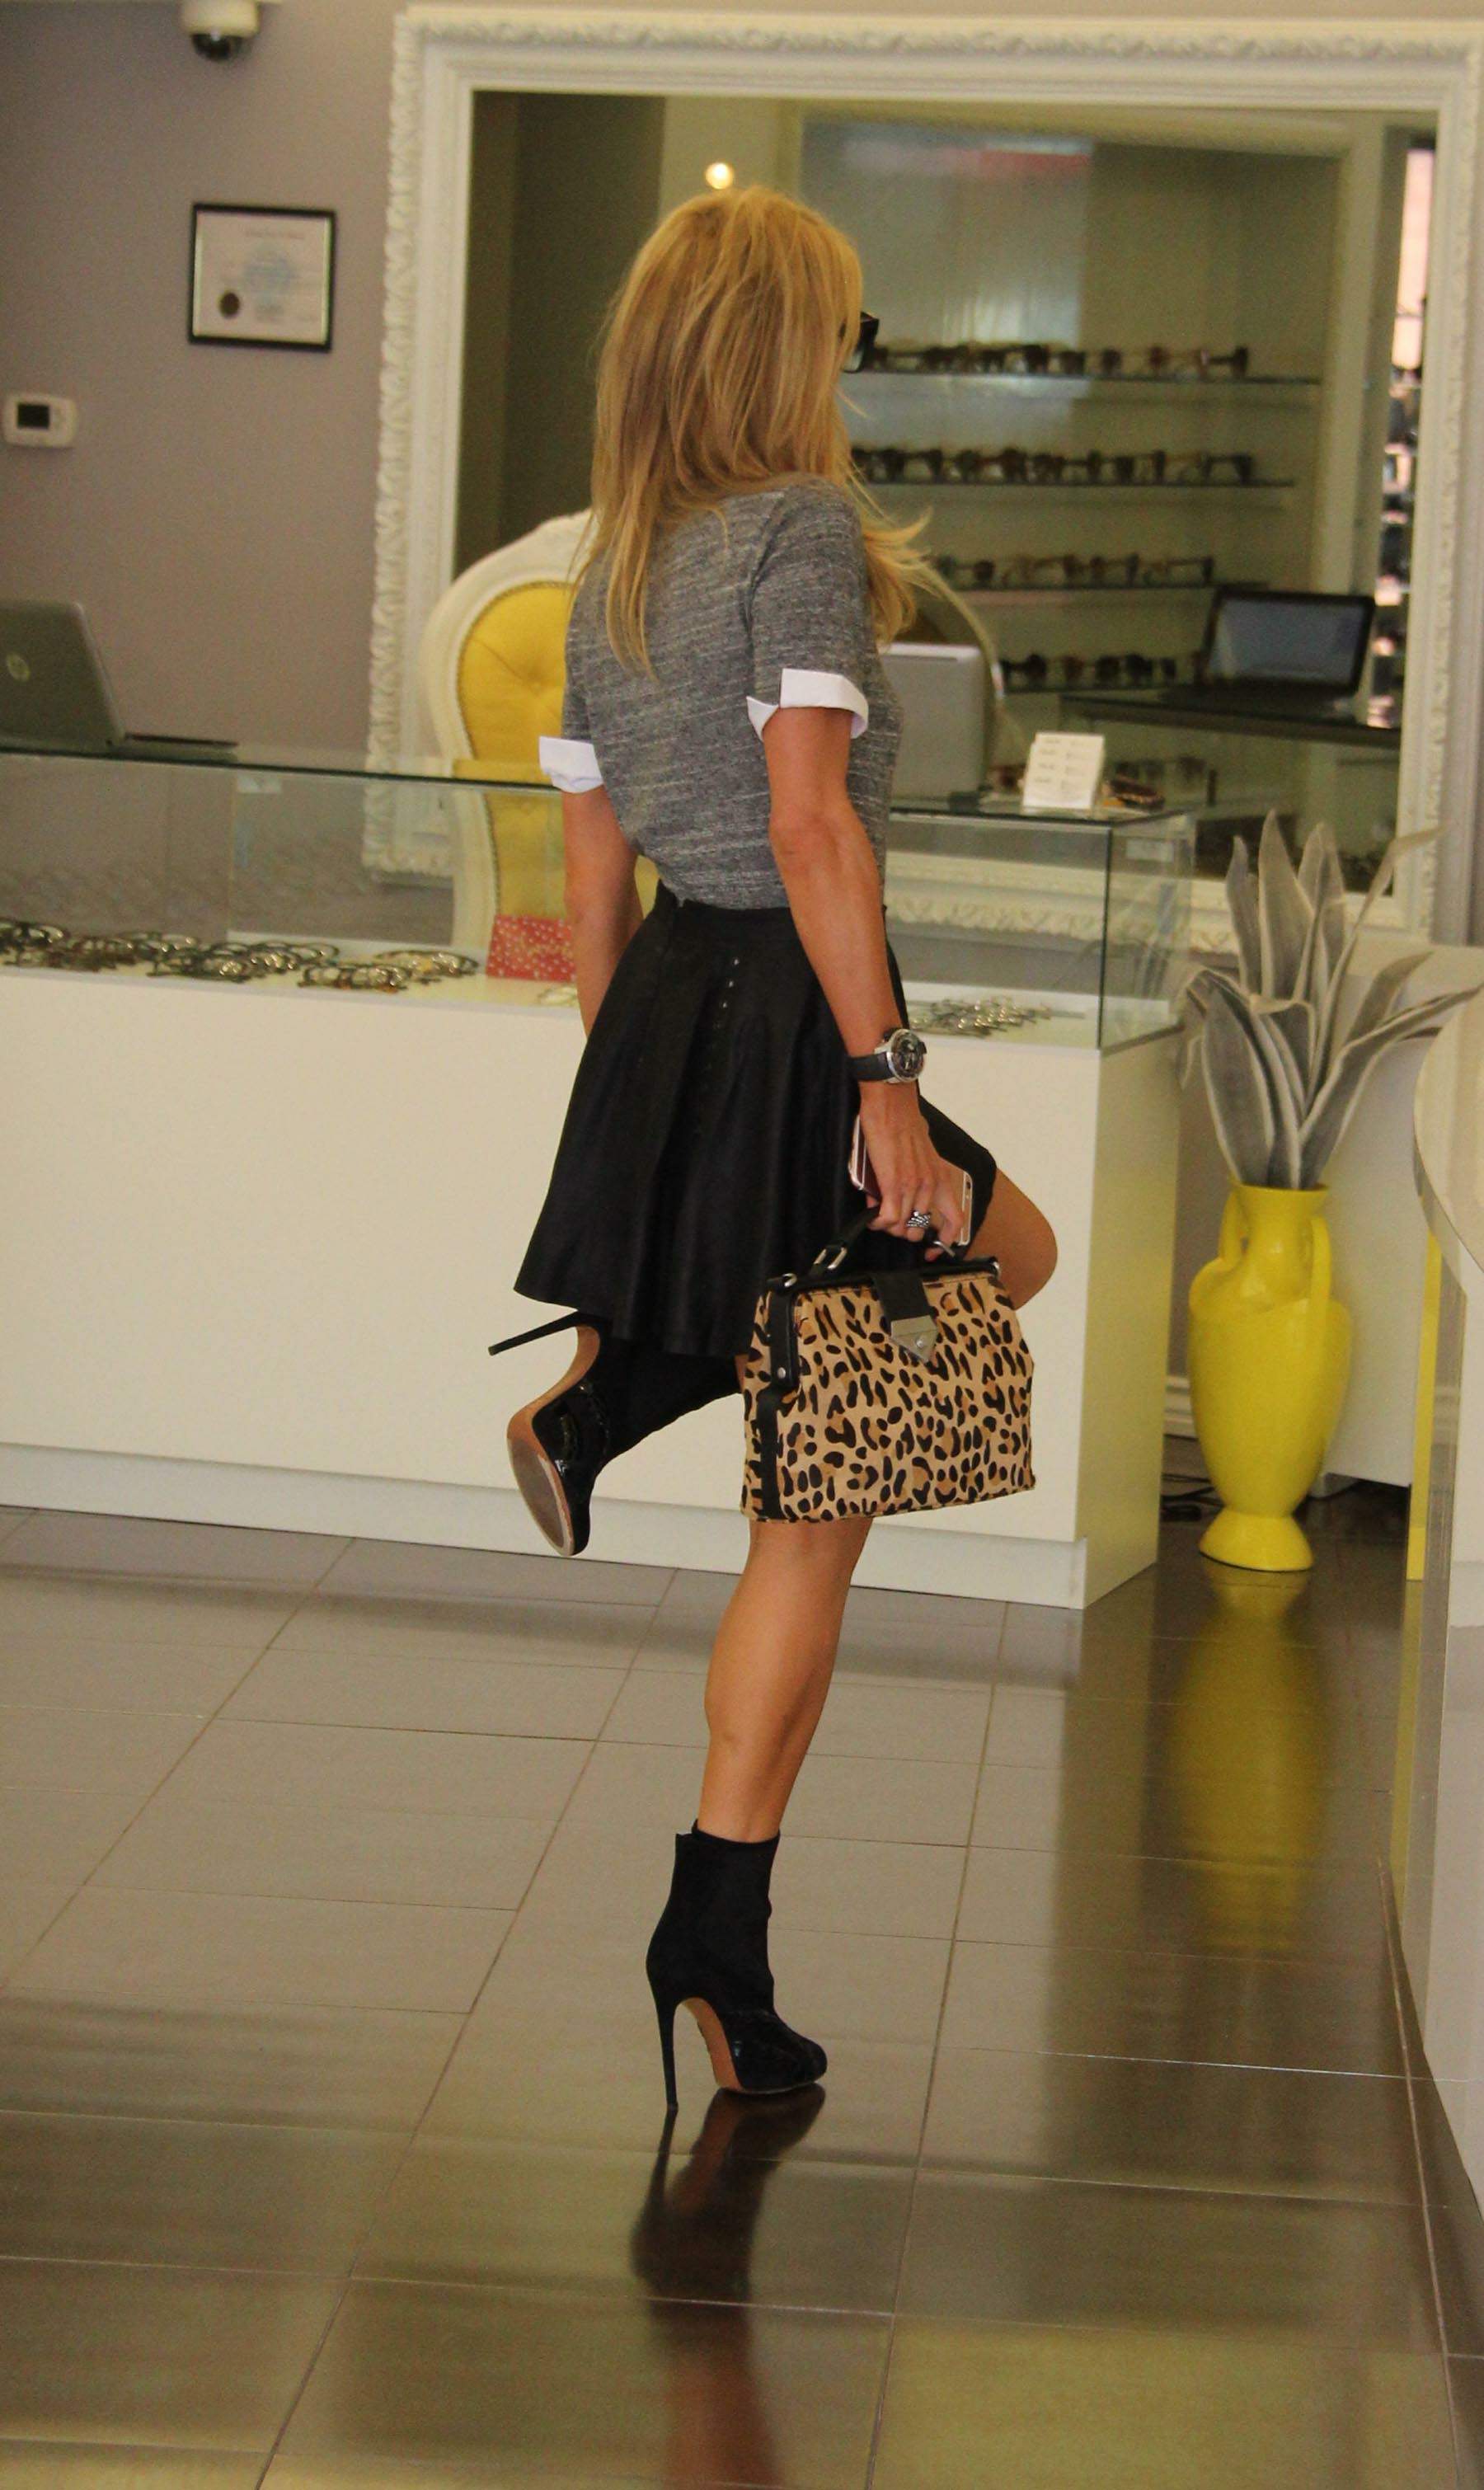 Paris Hilton is seen out shopping in LA